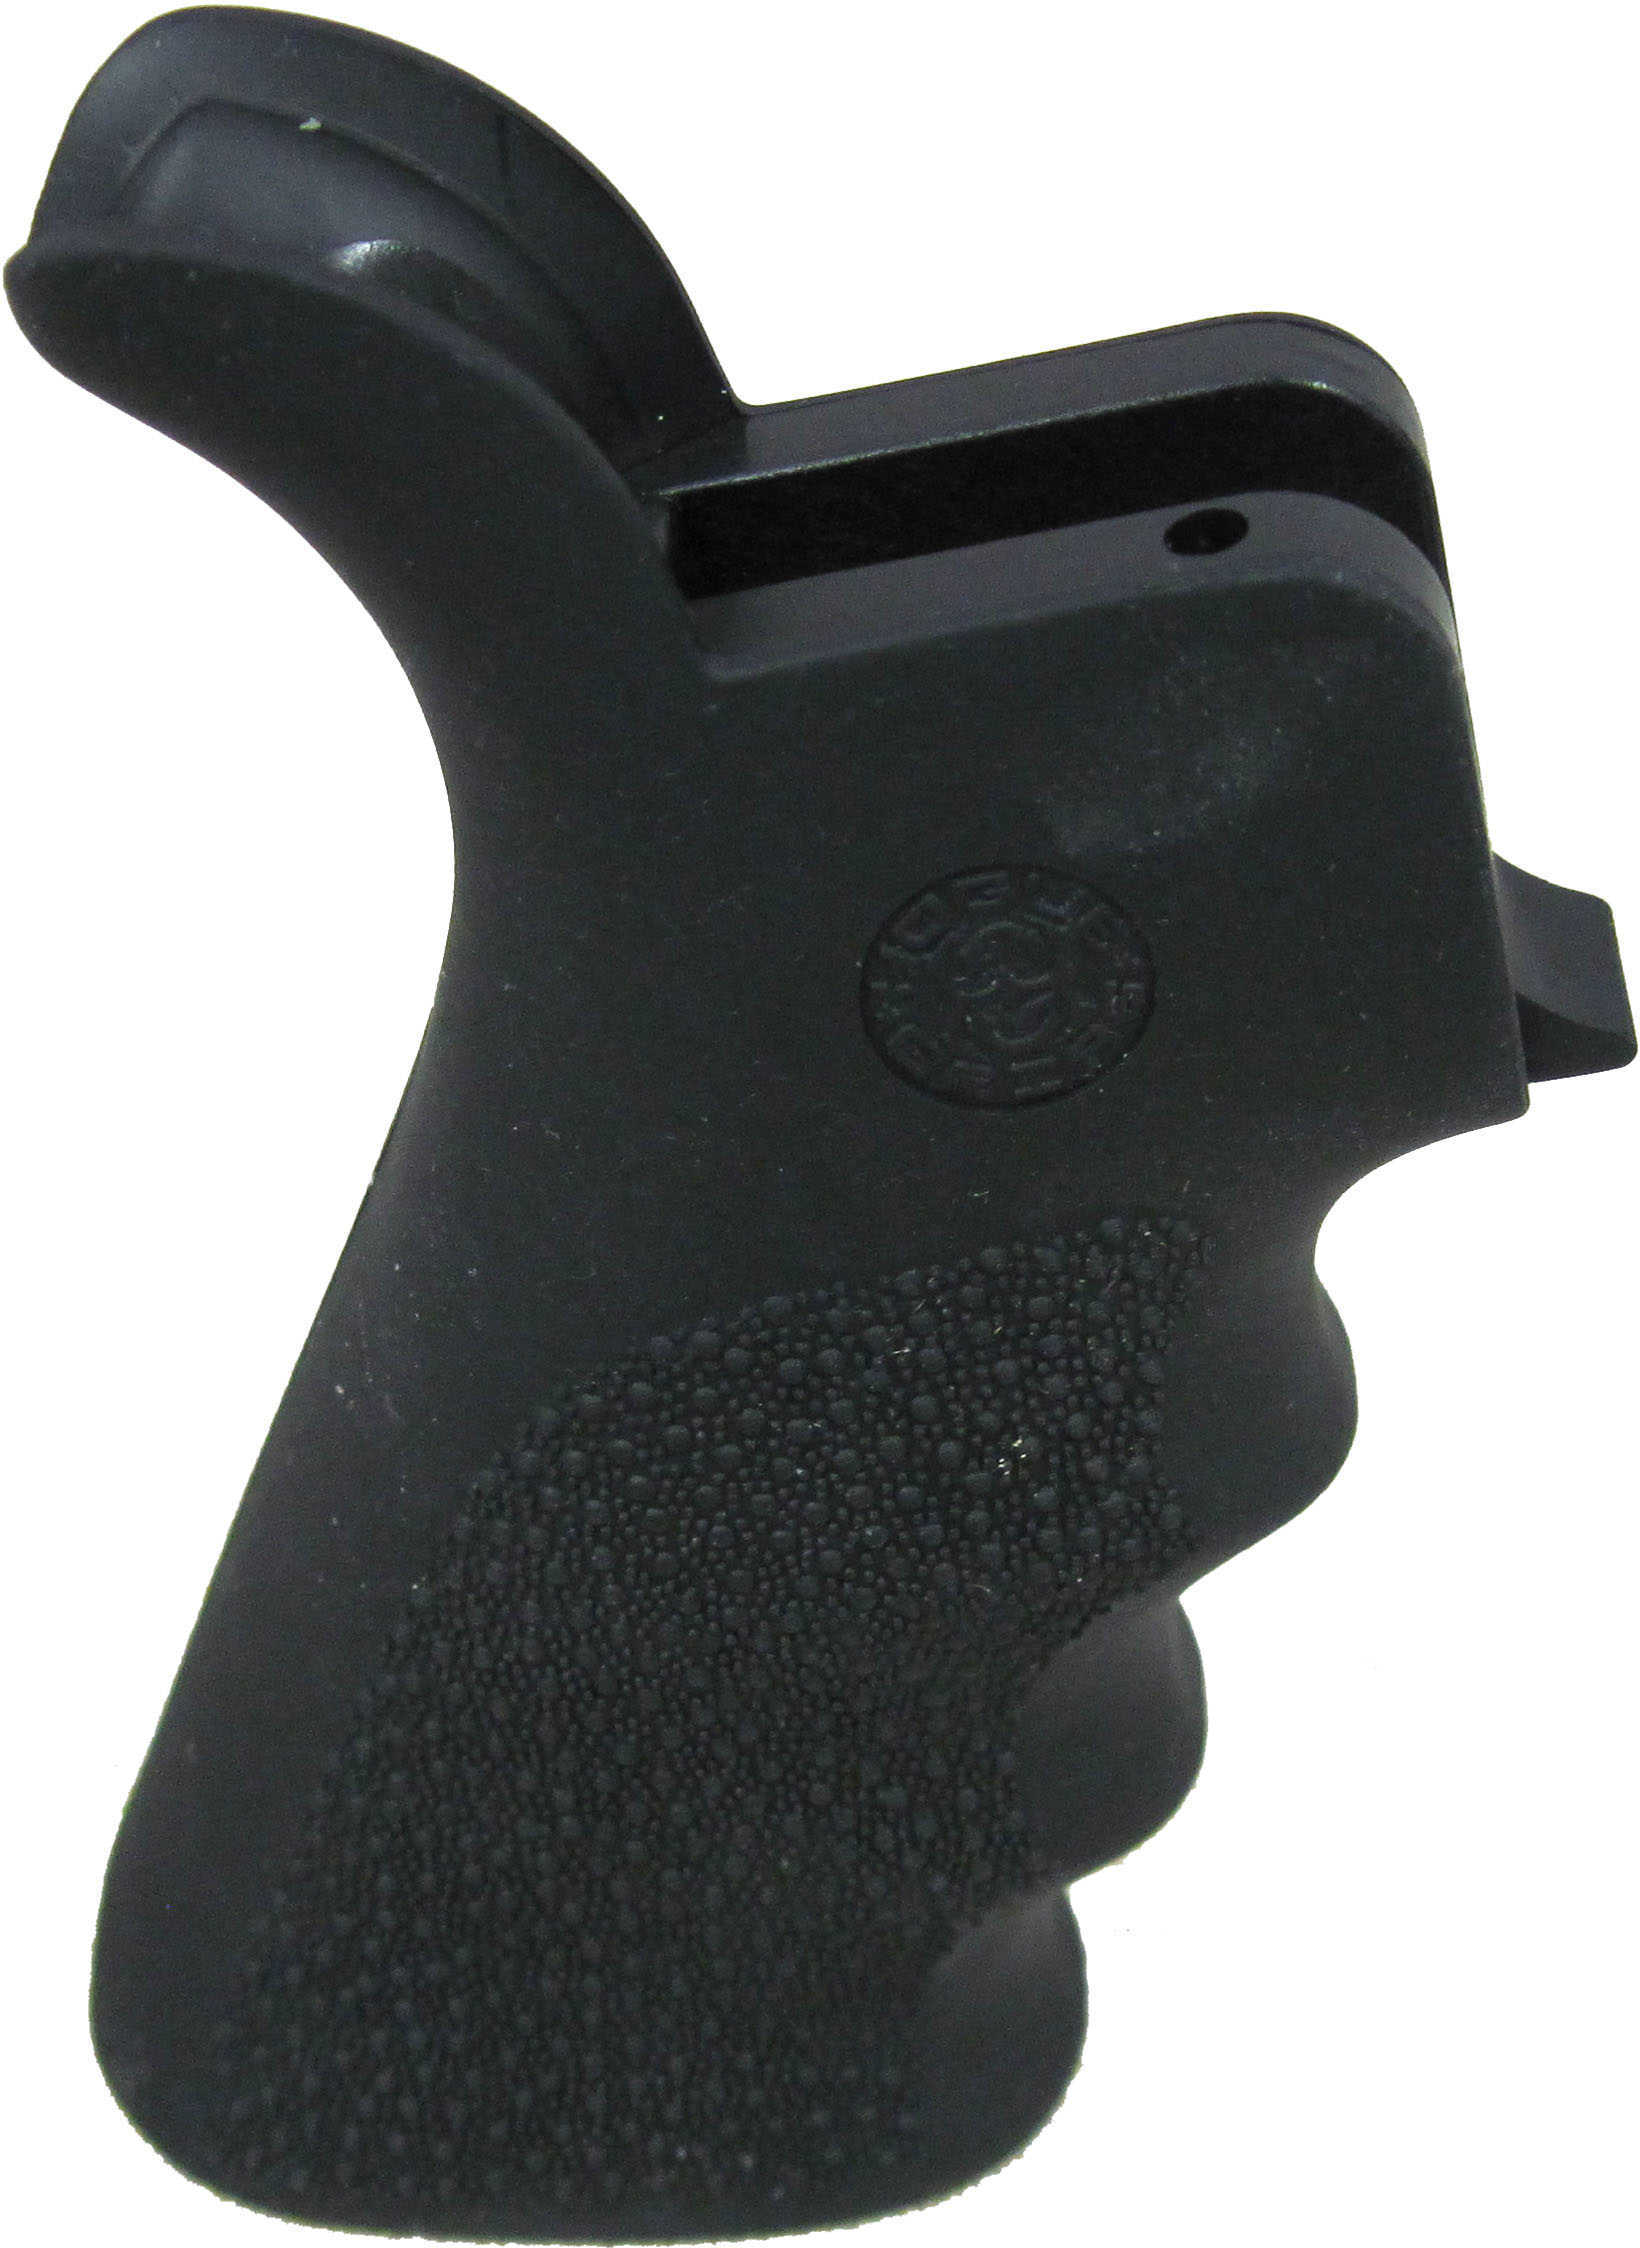 Hogue 15020 AR-15 Rubber Grip Beavertail W/Finger Grooves Matte Black